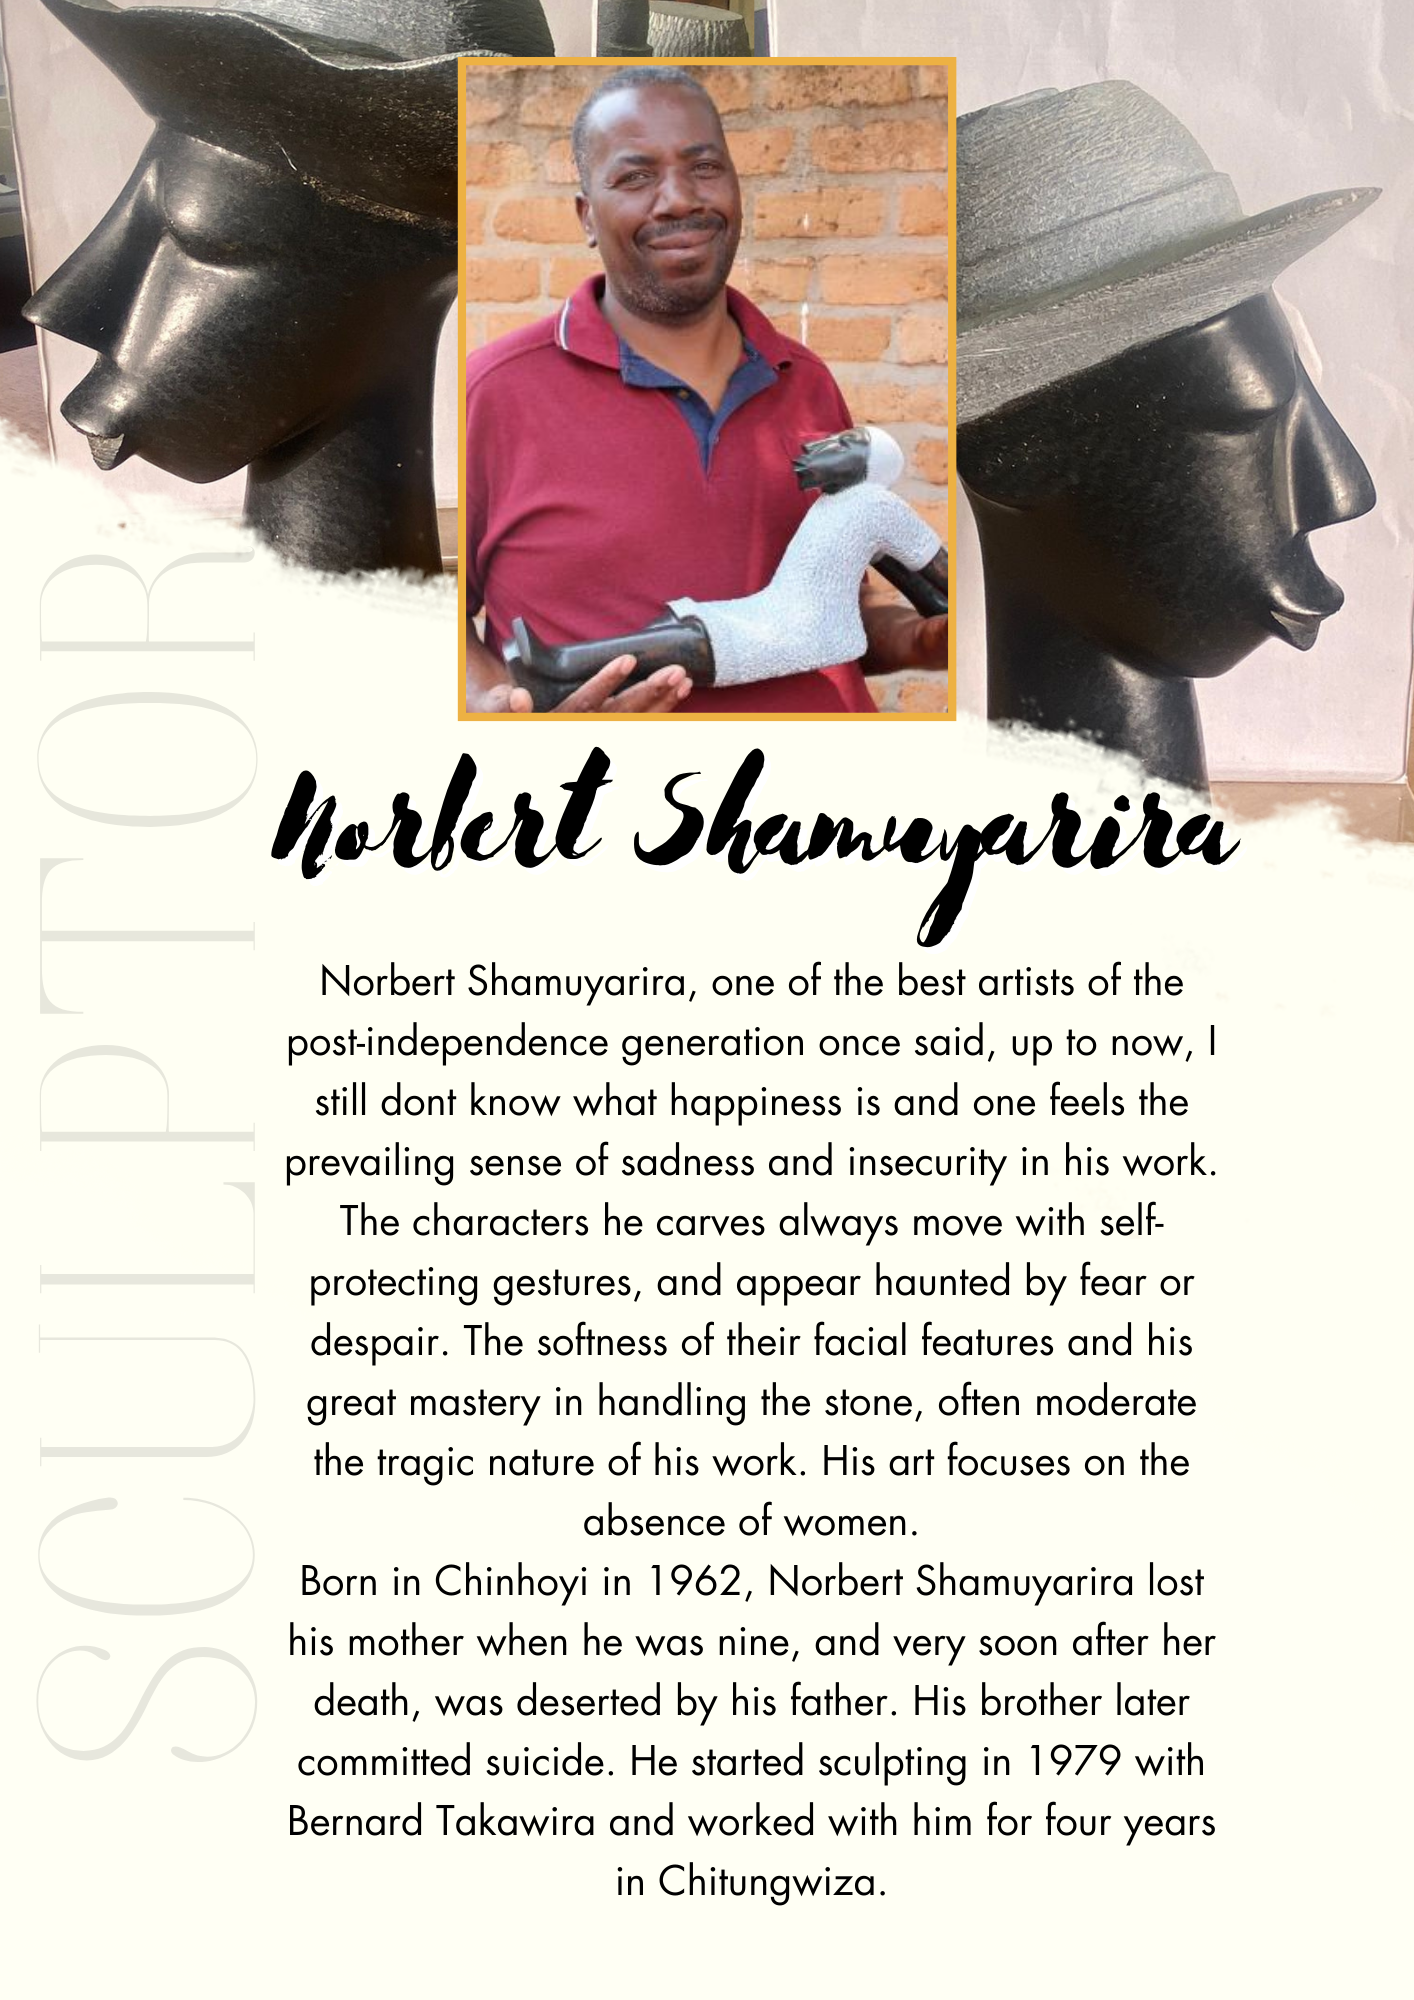 Norbert Shamuyarira